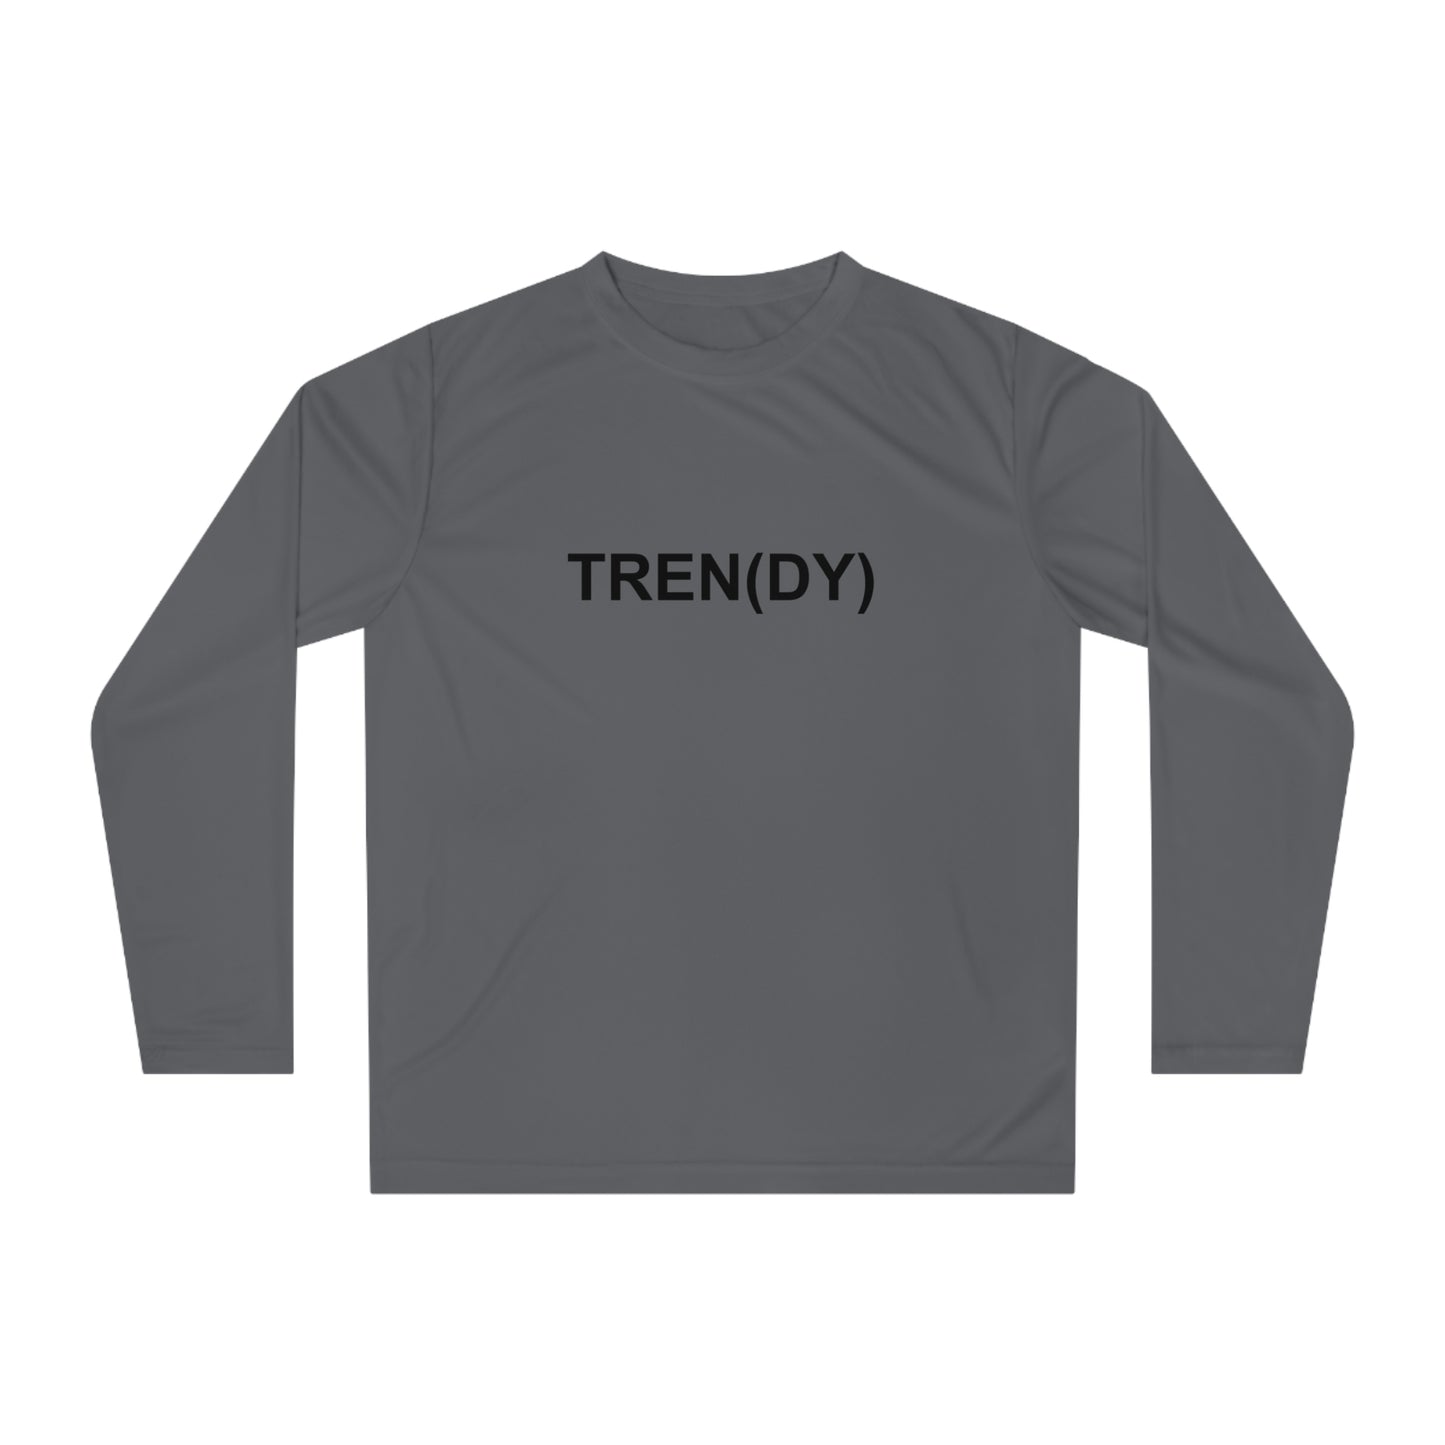 TREN(DY) Performance Long Sleeve Shirt